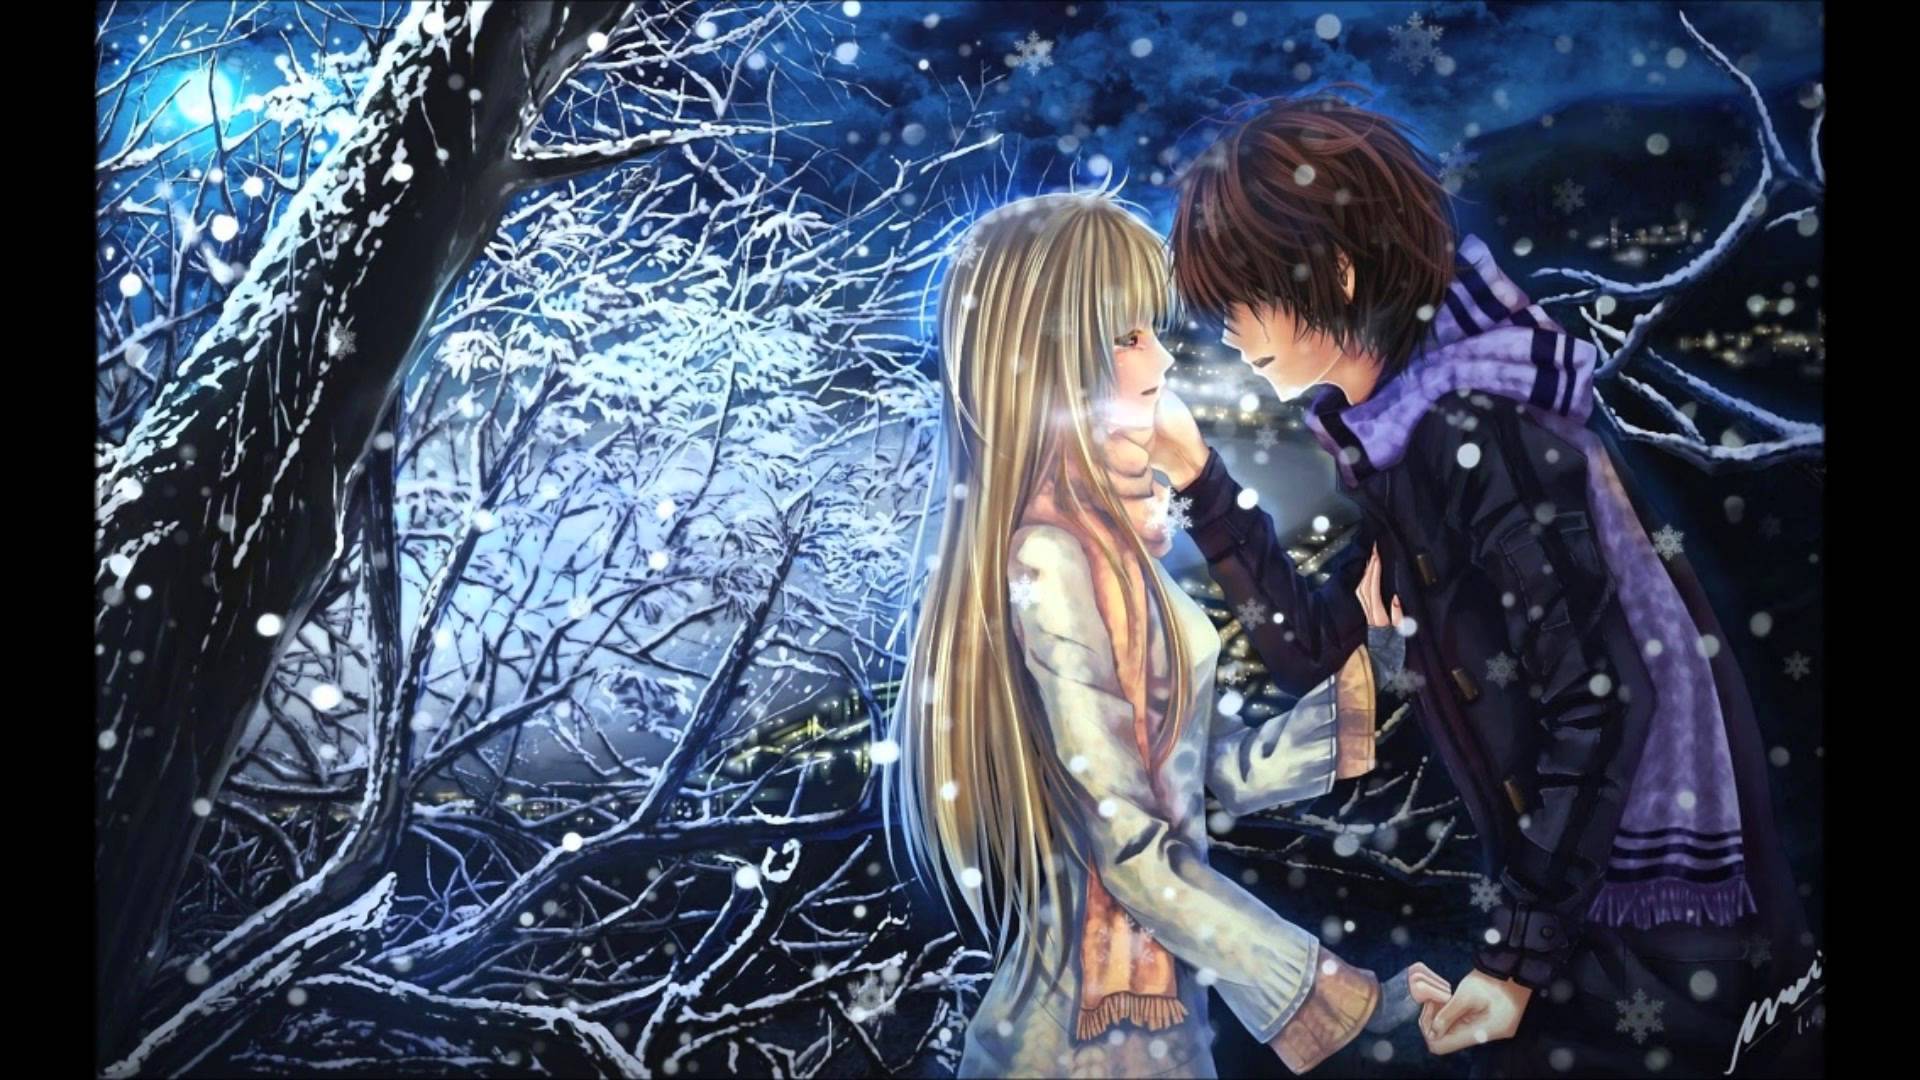 Anime Girl And Boy Wallpaper Hd - Romantic Anime Wallpaper Hd - HD Wallpaper 